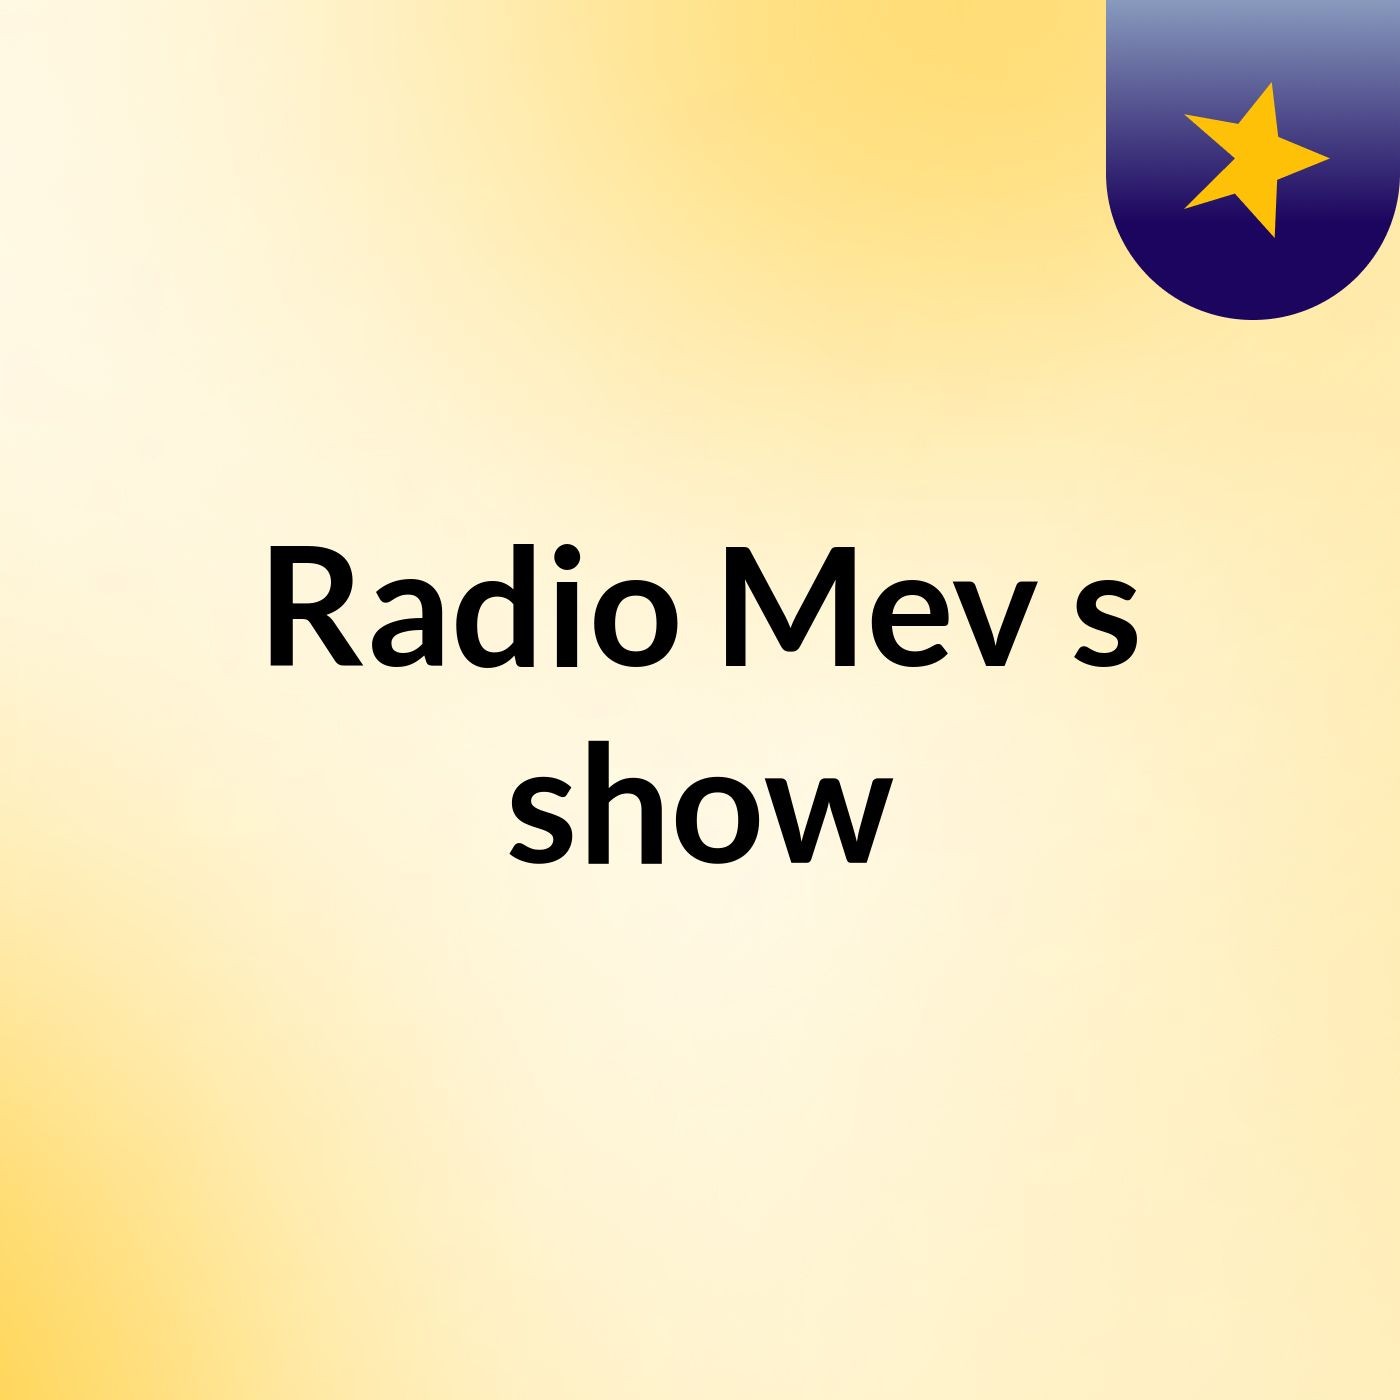 Radio Mev's show